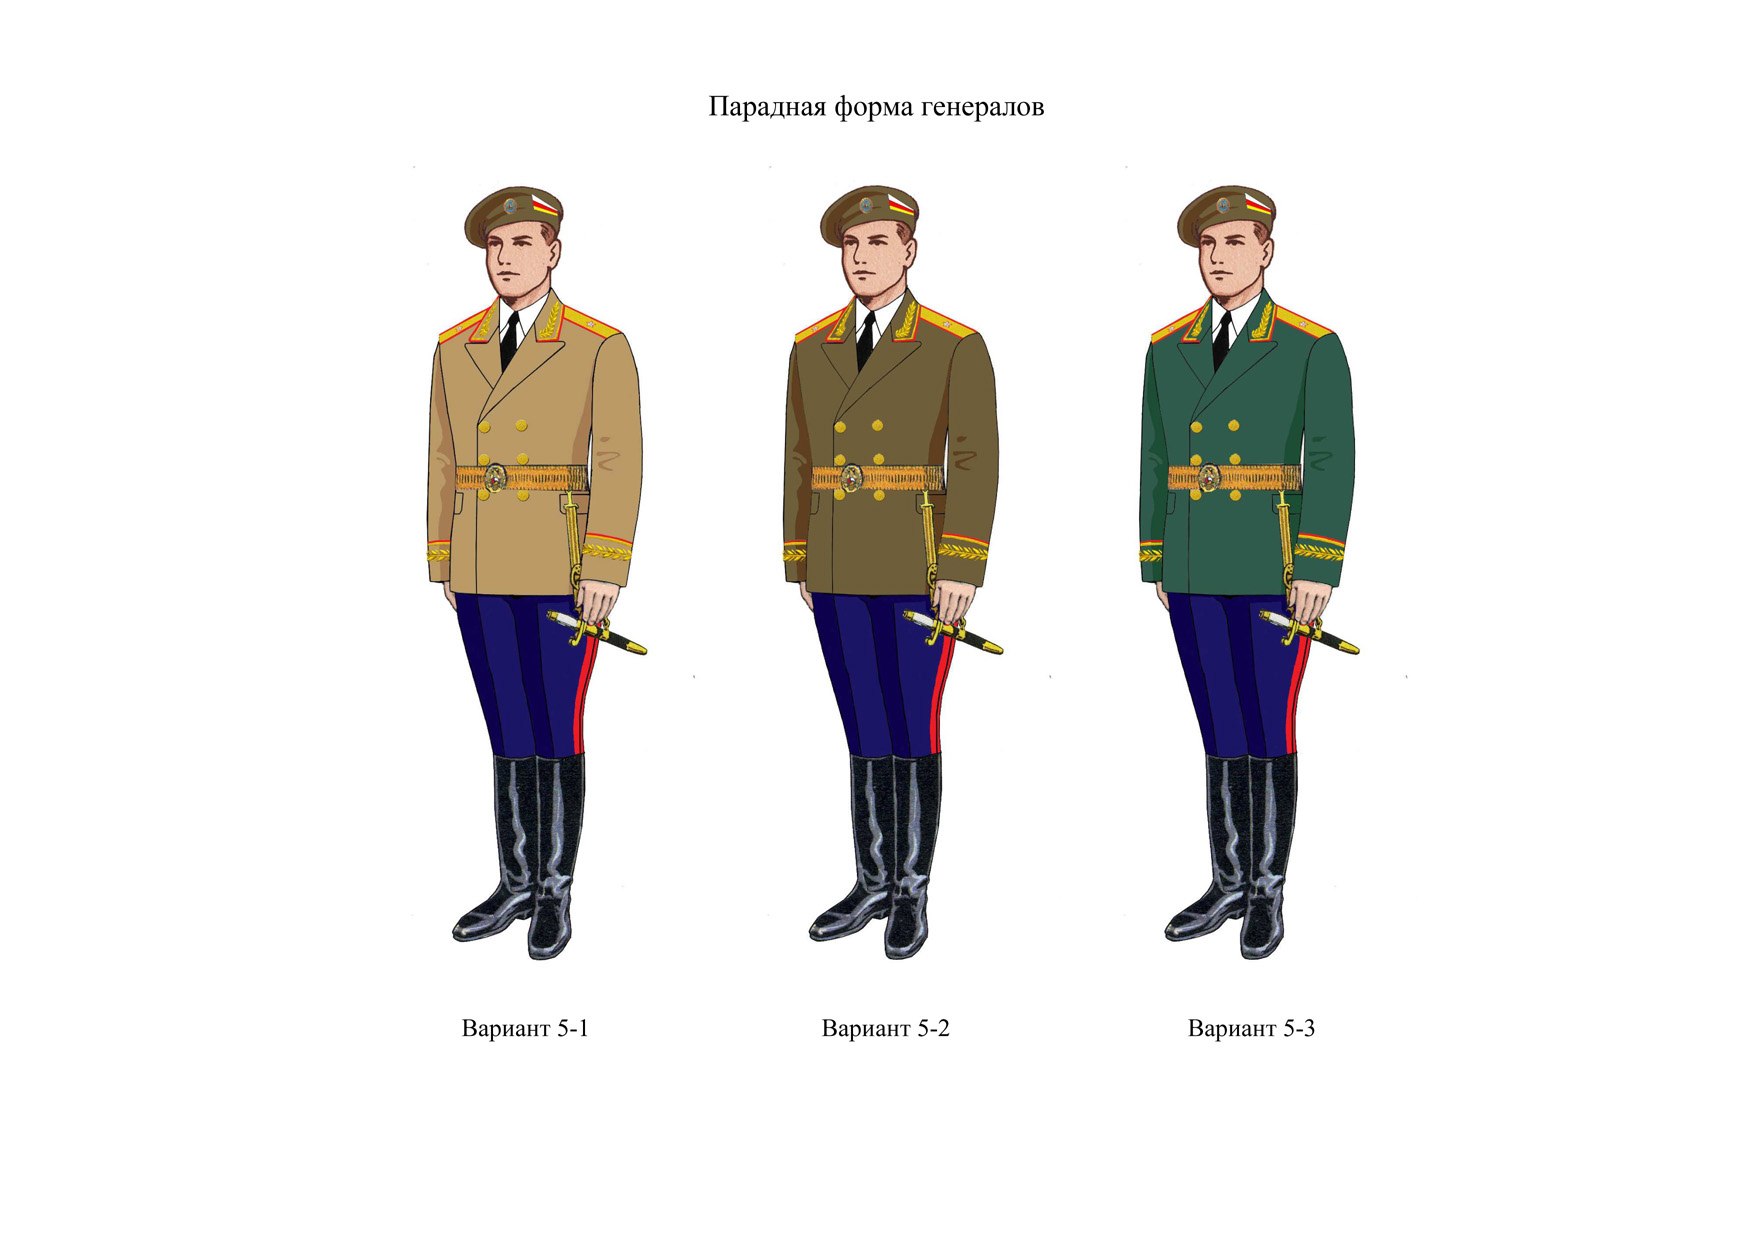 Пехота сухопутная форма одежды